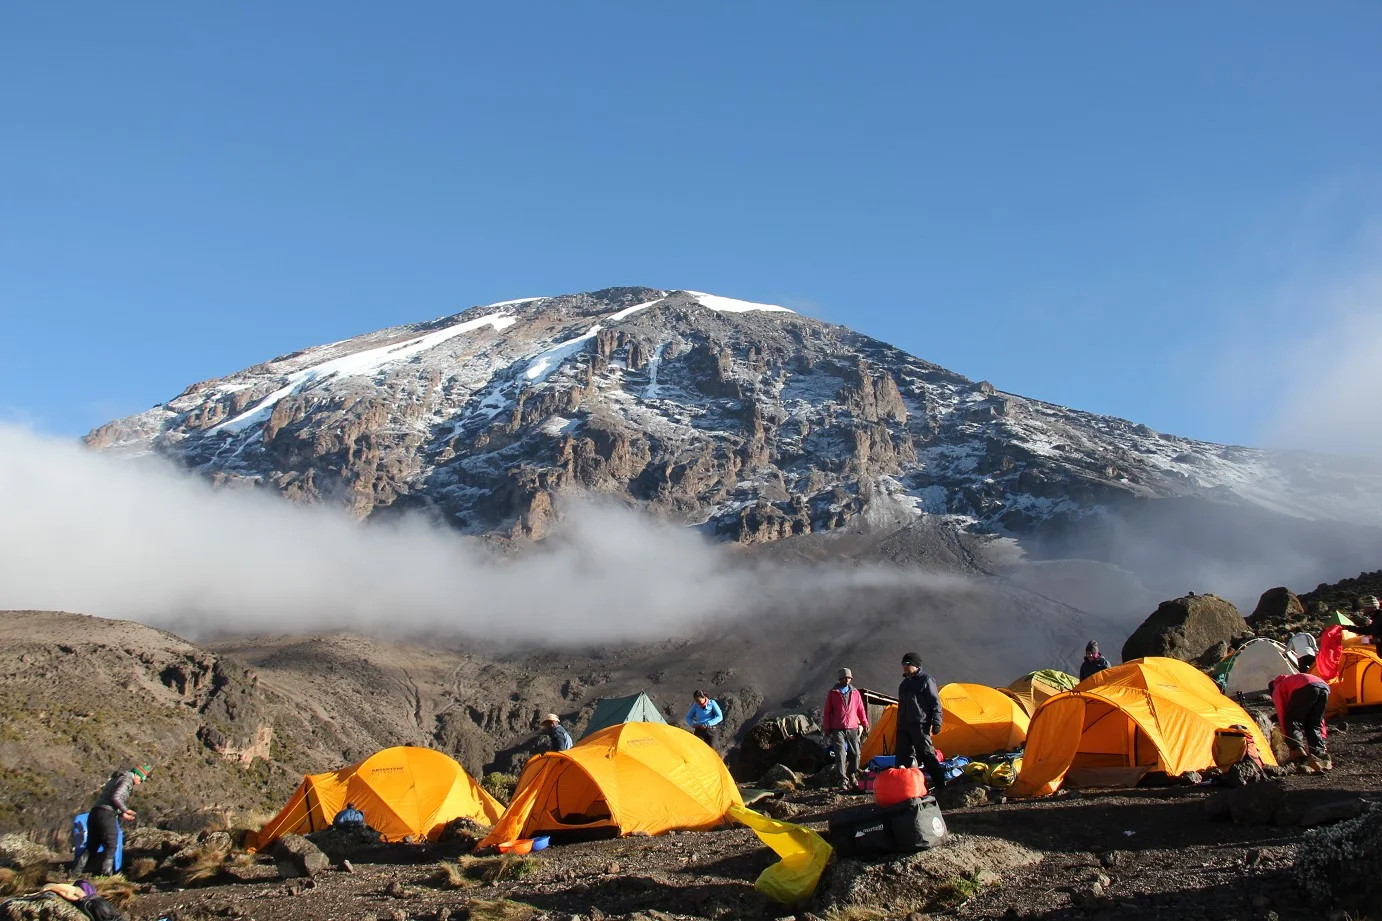 7 Days Mt. Kilimanjaro via Machame Route